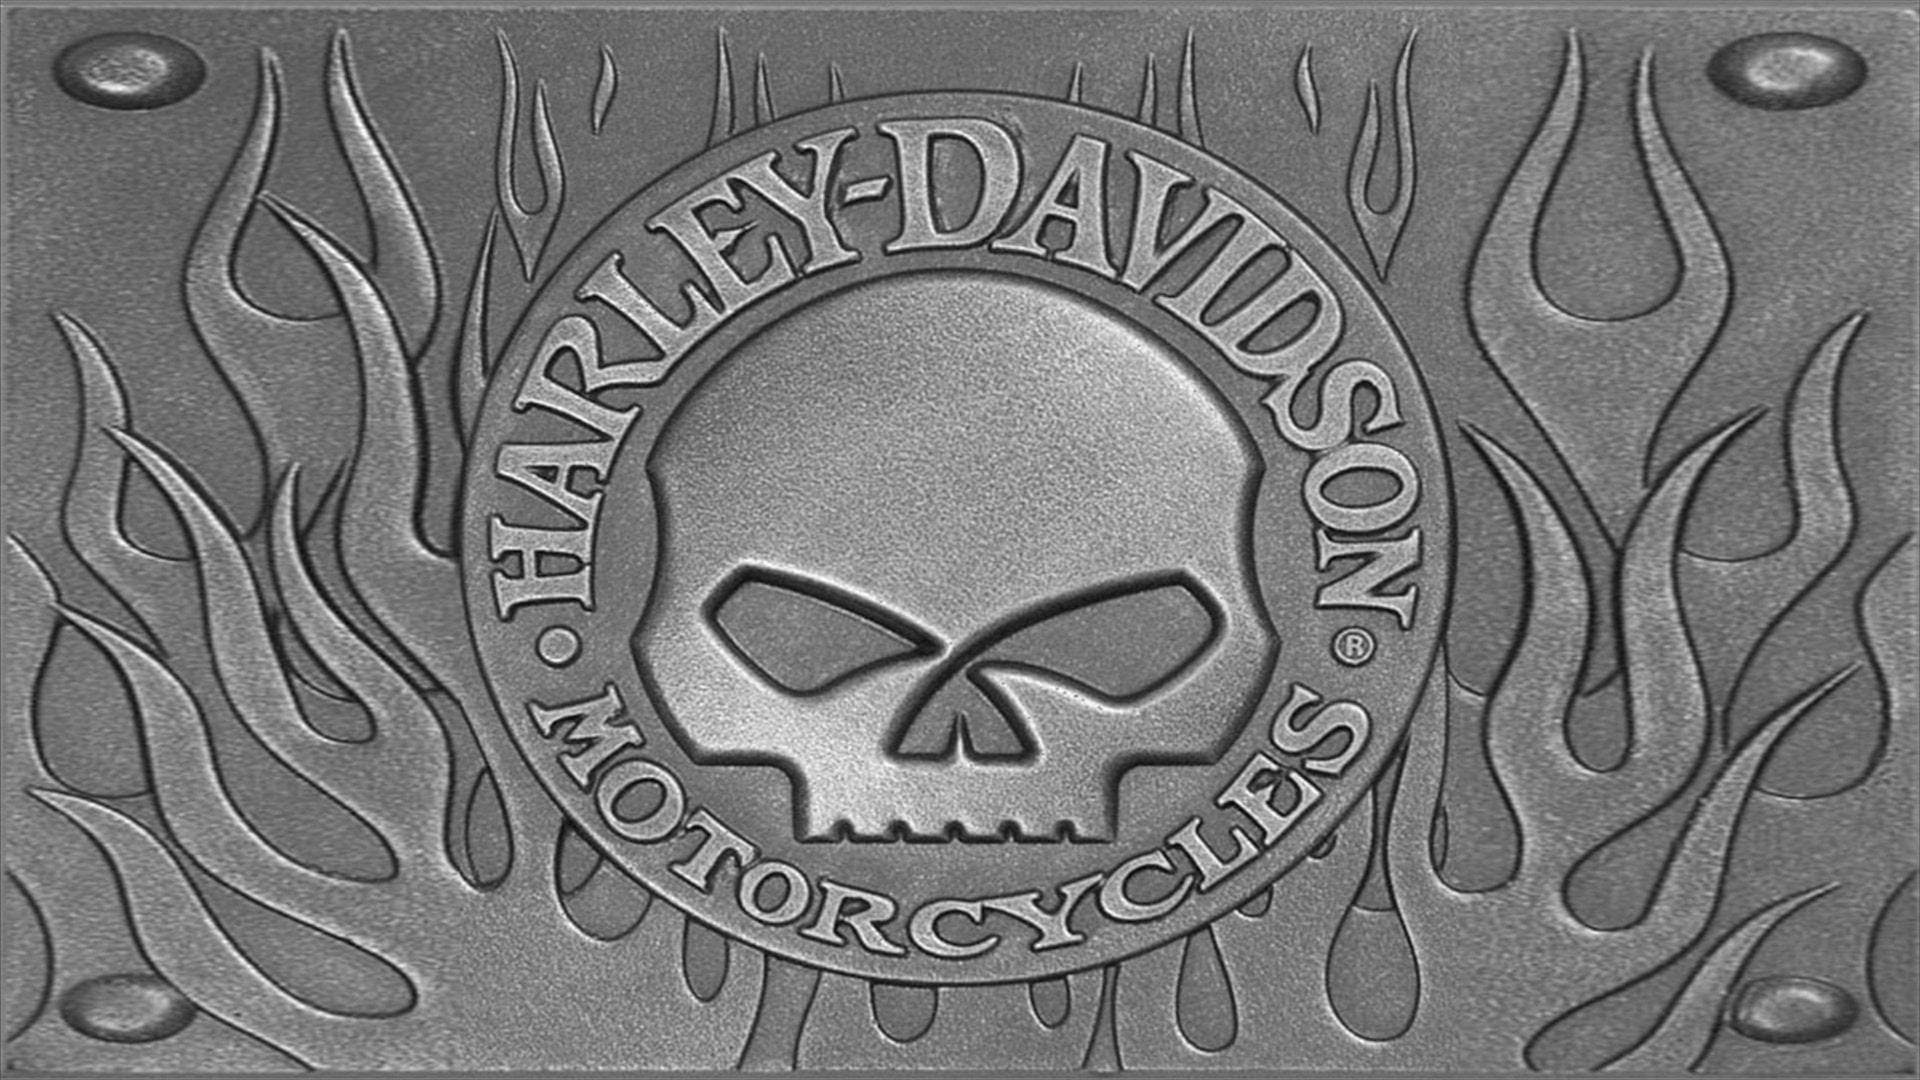 Silver Haley Davidson Motorcycle Emblem Background